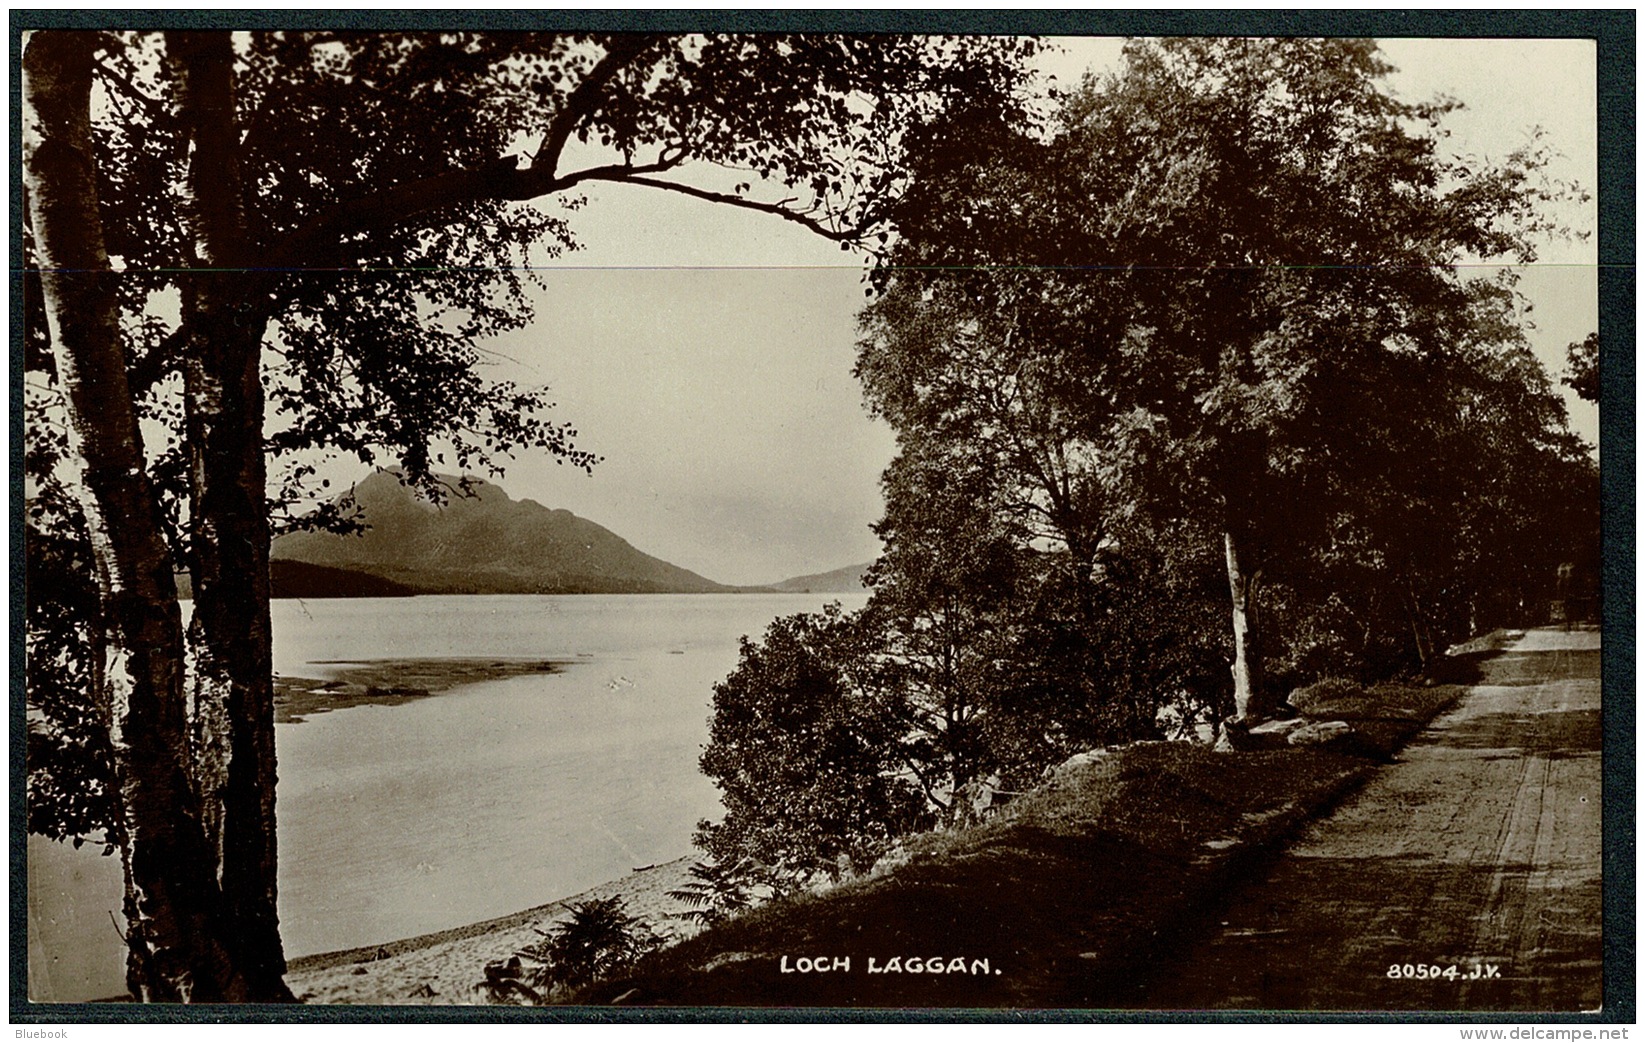 RB 1212 - 2 X Real Photo Postcard - Loch Laggan - Inverness-shire Scotland - Inverness-shire